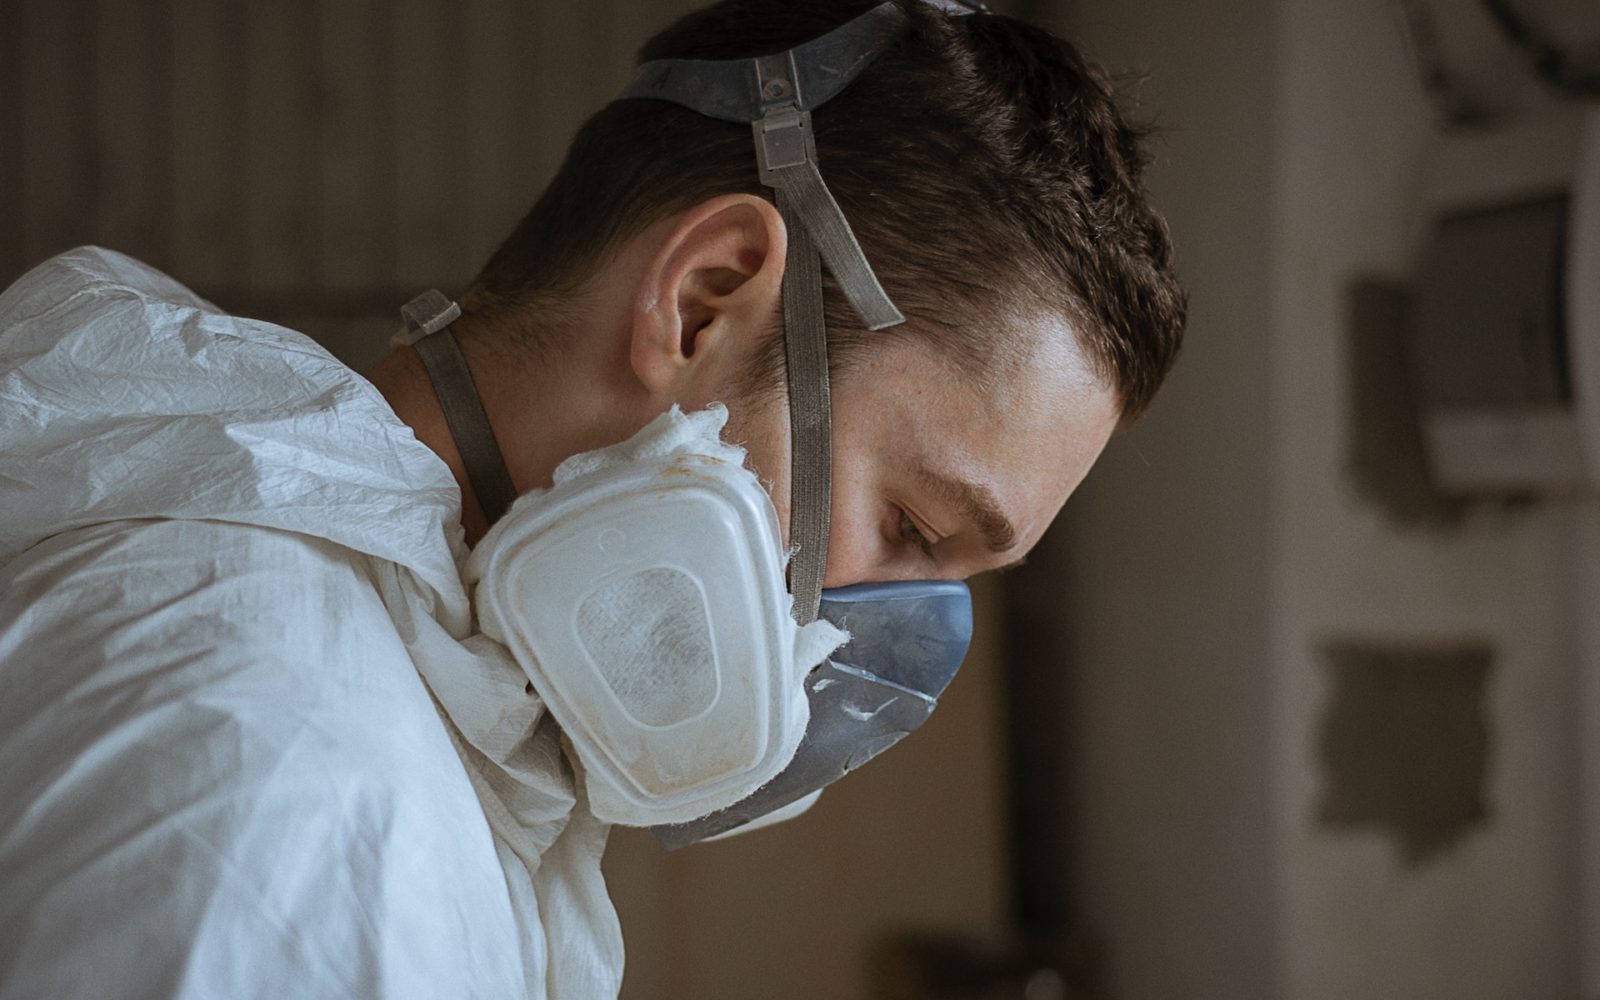 Man wearing PPE breathing equipment